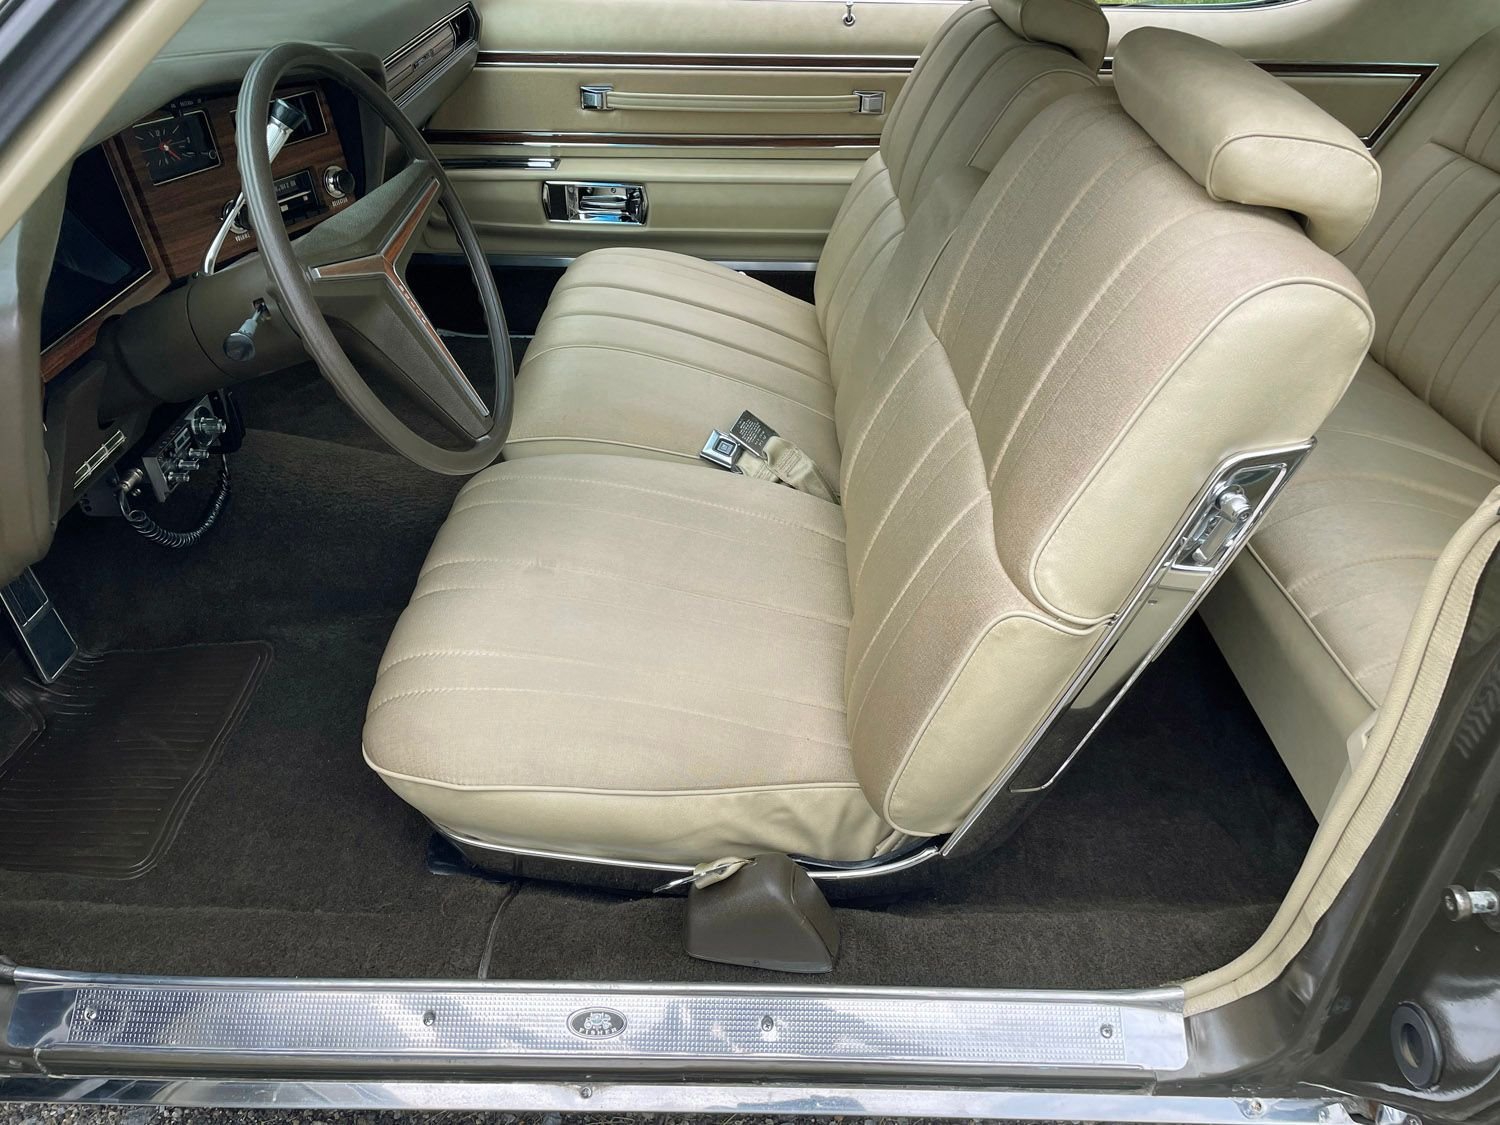 1973 Buick Electra 225 Custom